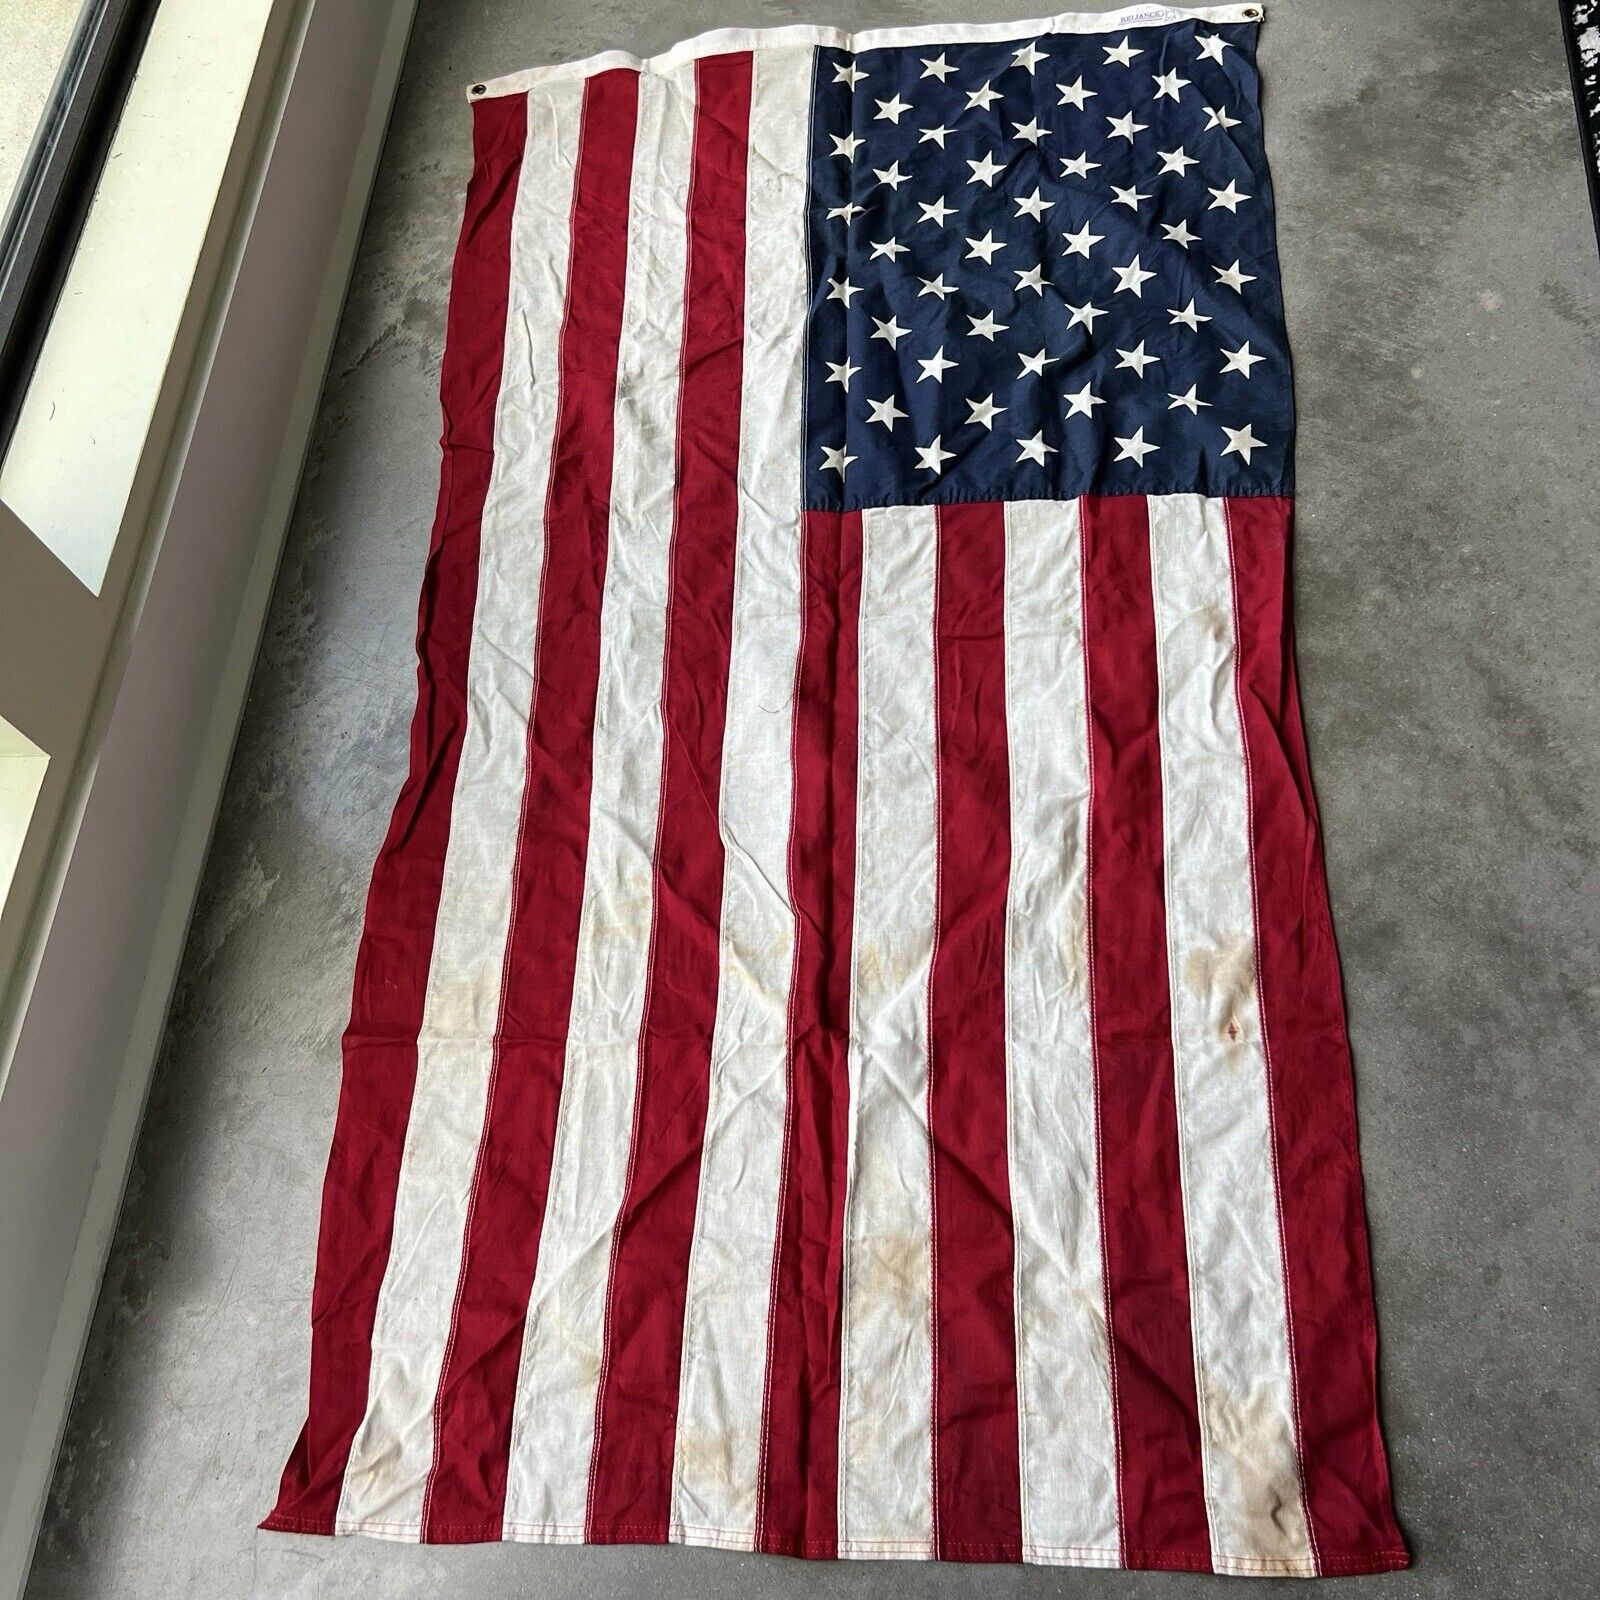 America Vintage 3 X 5 ft Cotton Sewn USA Printed 50 Star American Reliance Flag